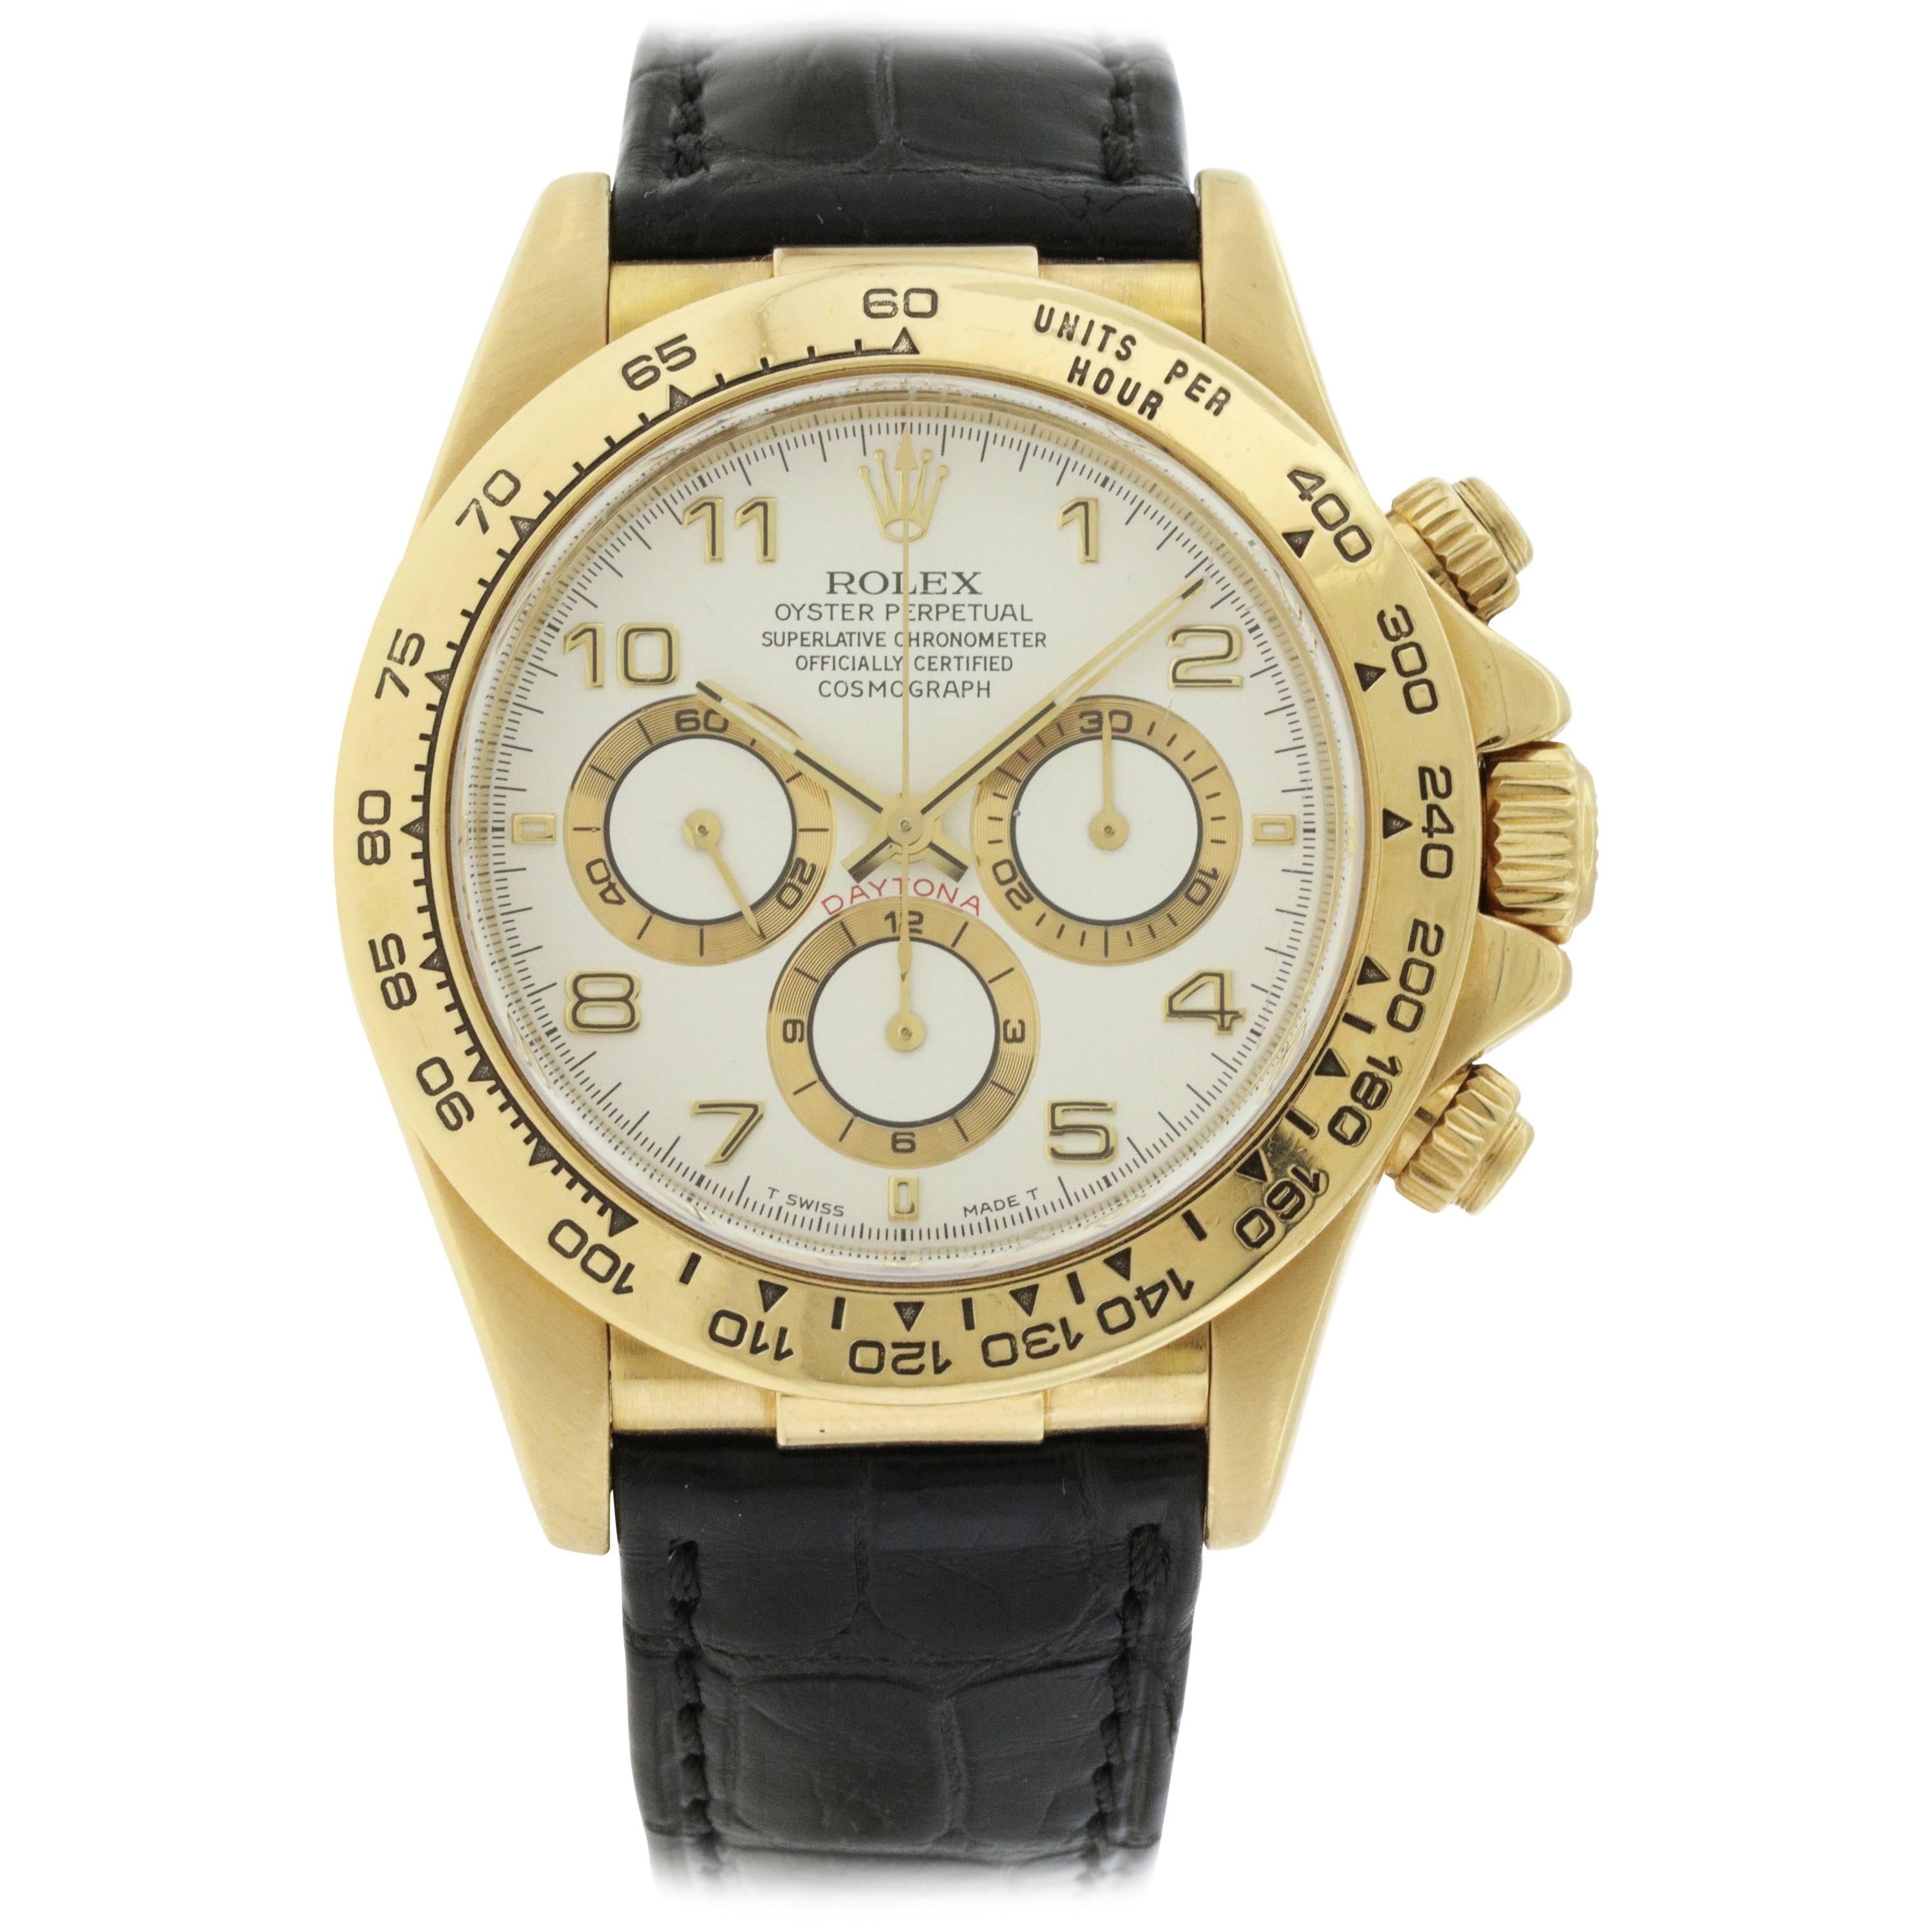 Rolex Yellow Gold Daytona "Zenith" Chronograph Self Winding Wristwatch Ref 16518